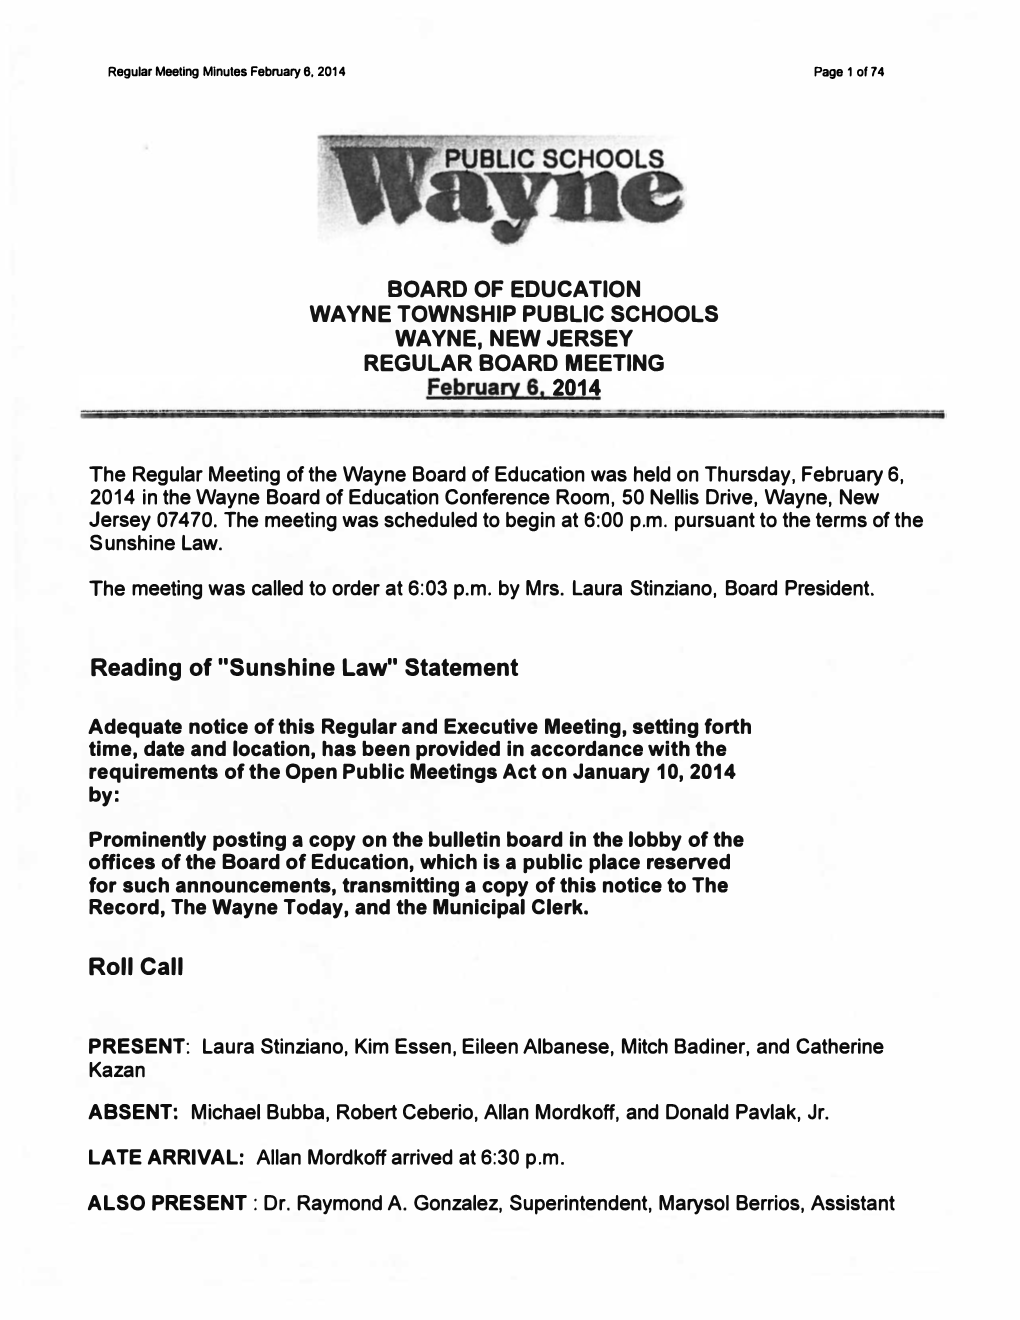 The Regular Meeting of the Wayne Board Of